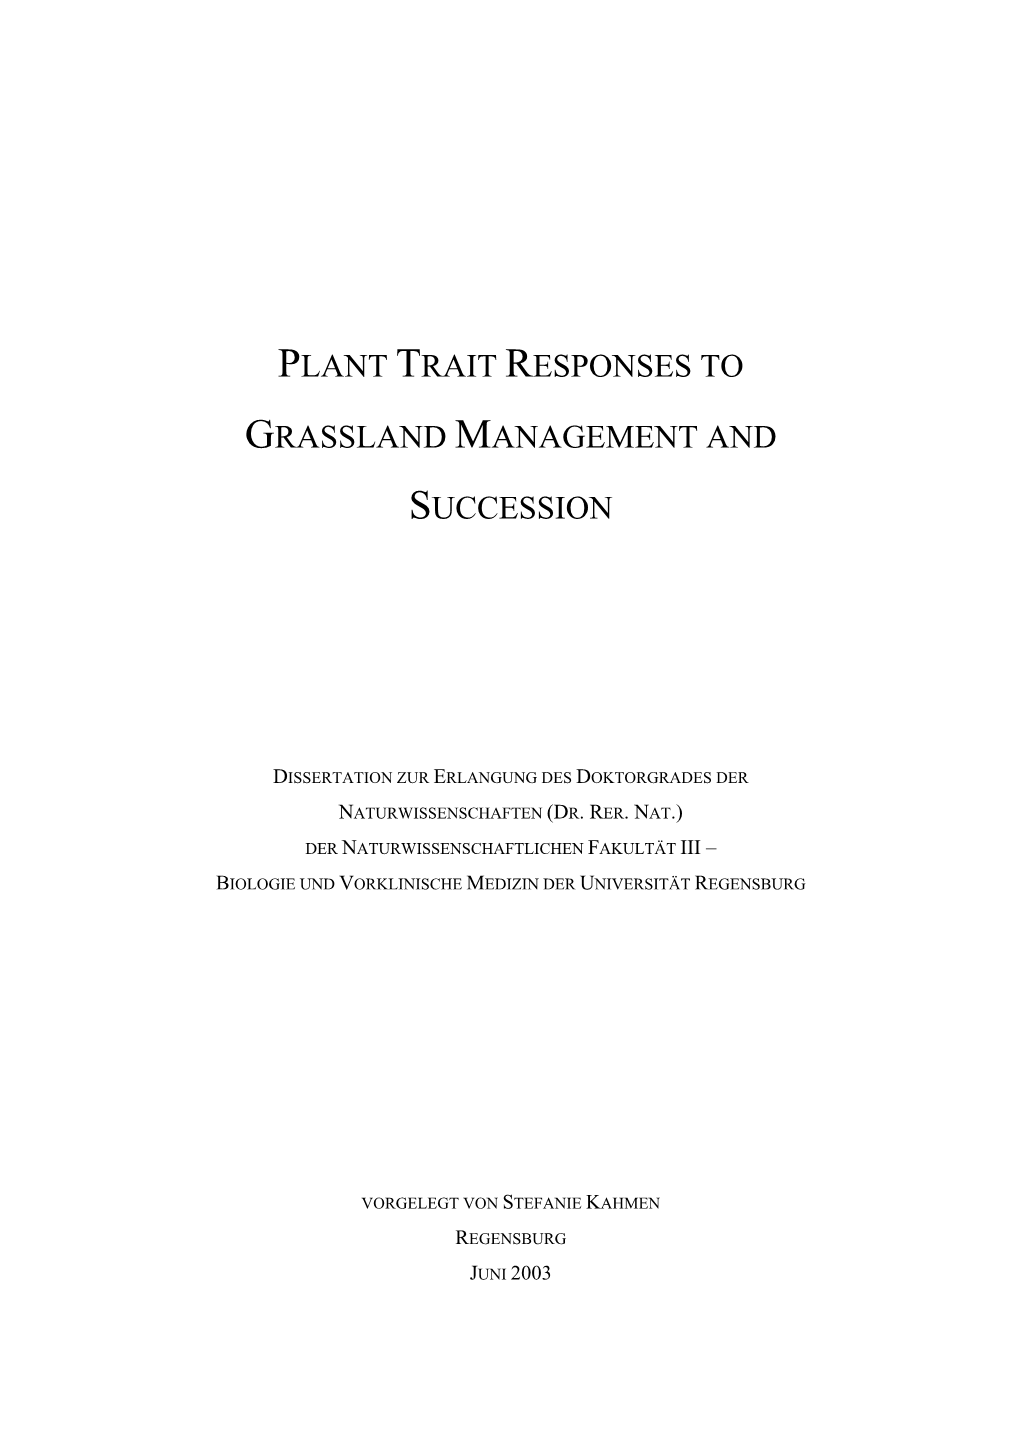 Plant Trait Responses to Grassland Management and Succession